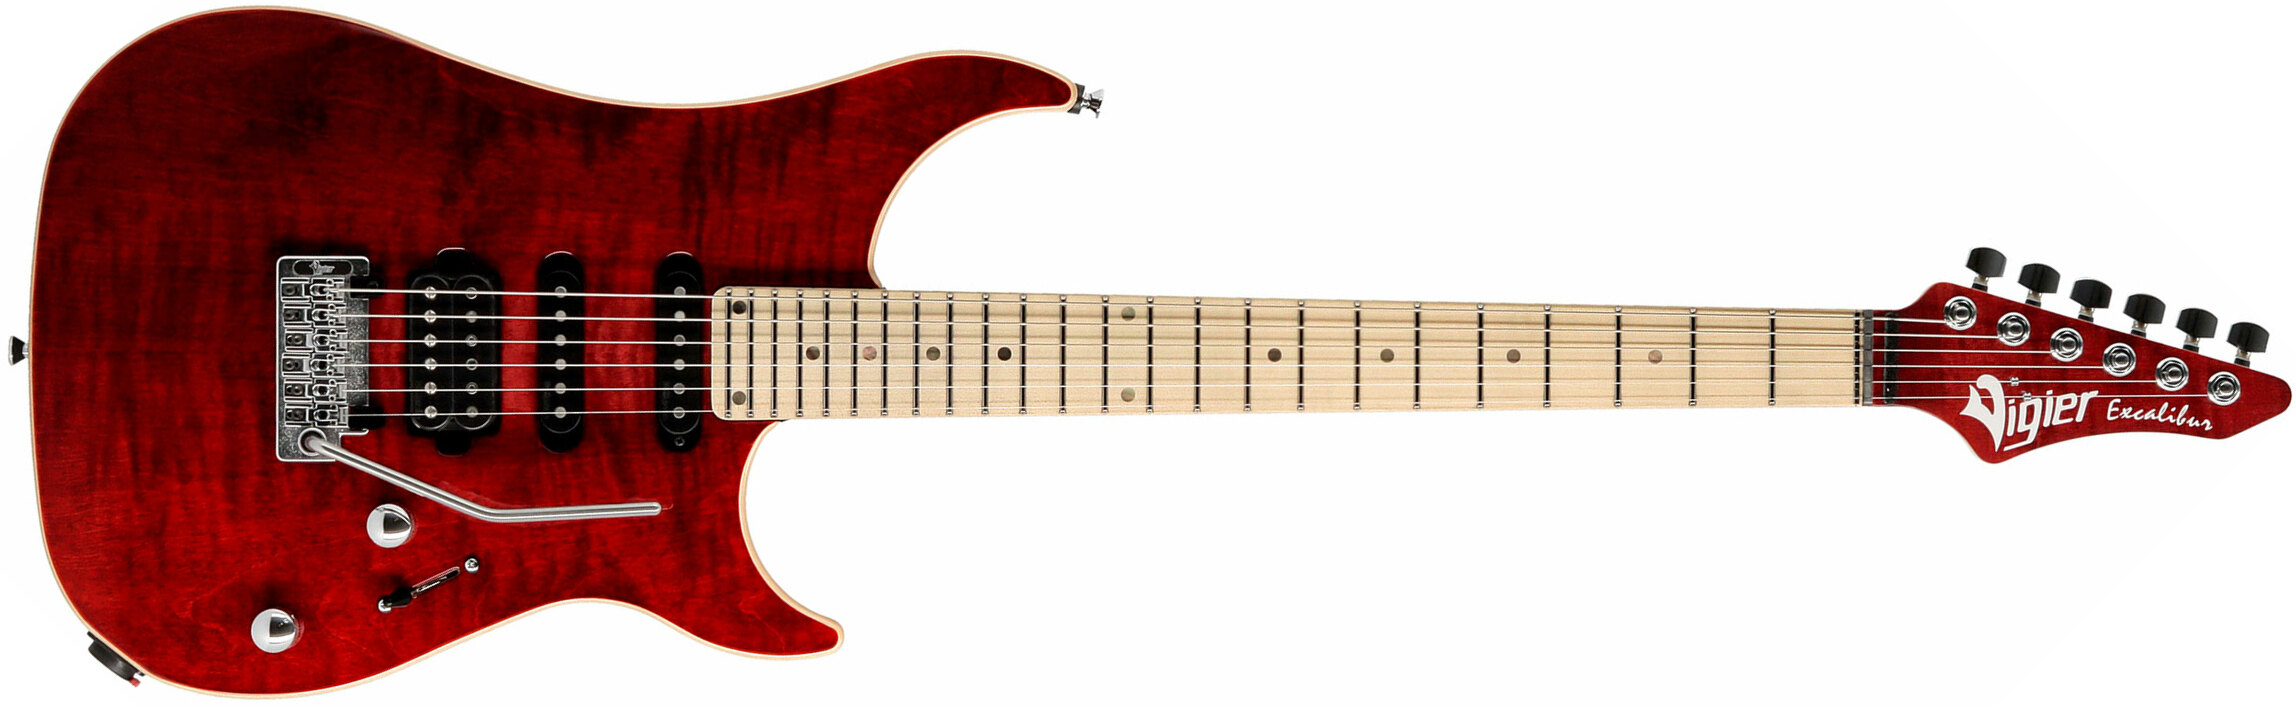 Vigier Excalibur Ultra Blues Hss Trem Mn - Ruby - E-Gitarre in Str-Form - Main picture